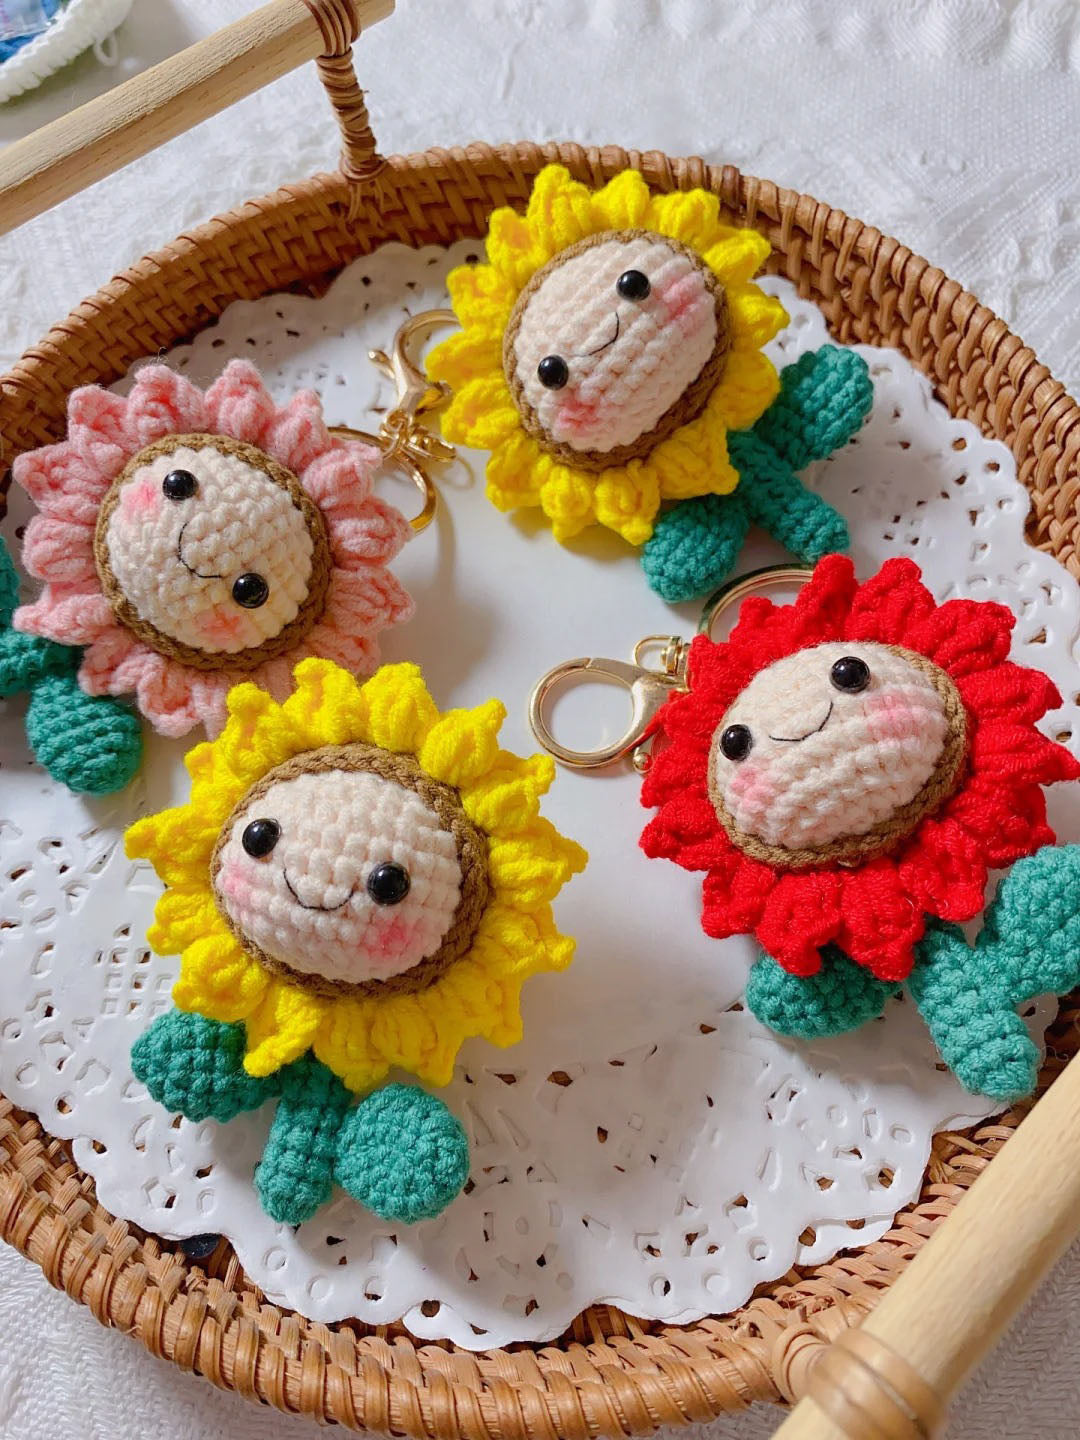 Mini Sunflower Crochet Pattern